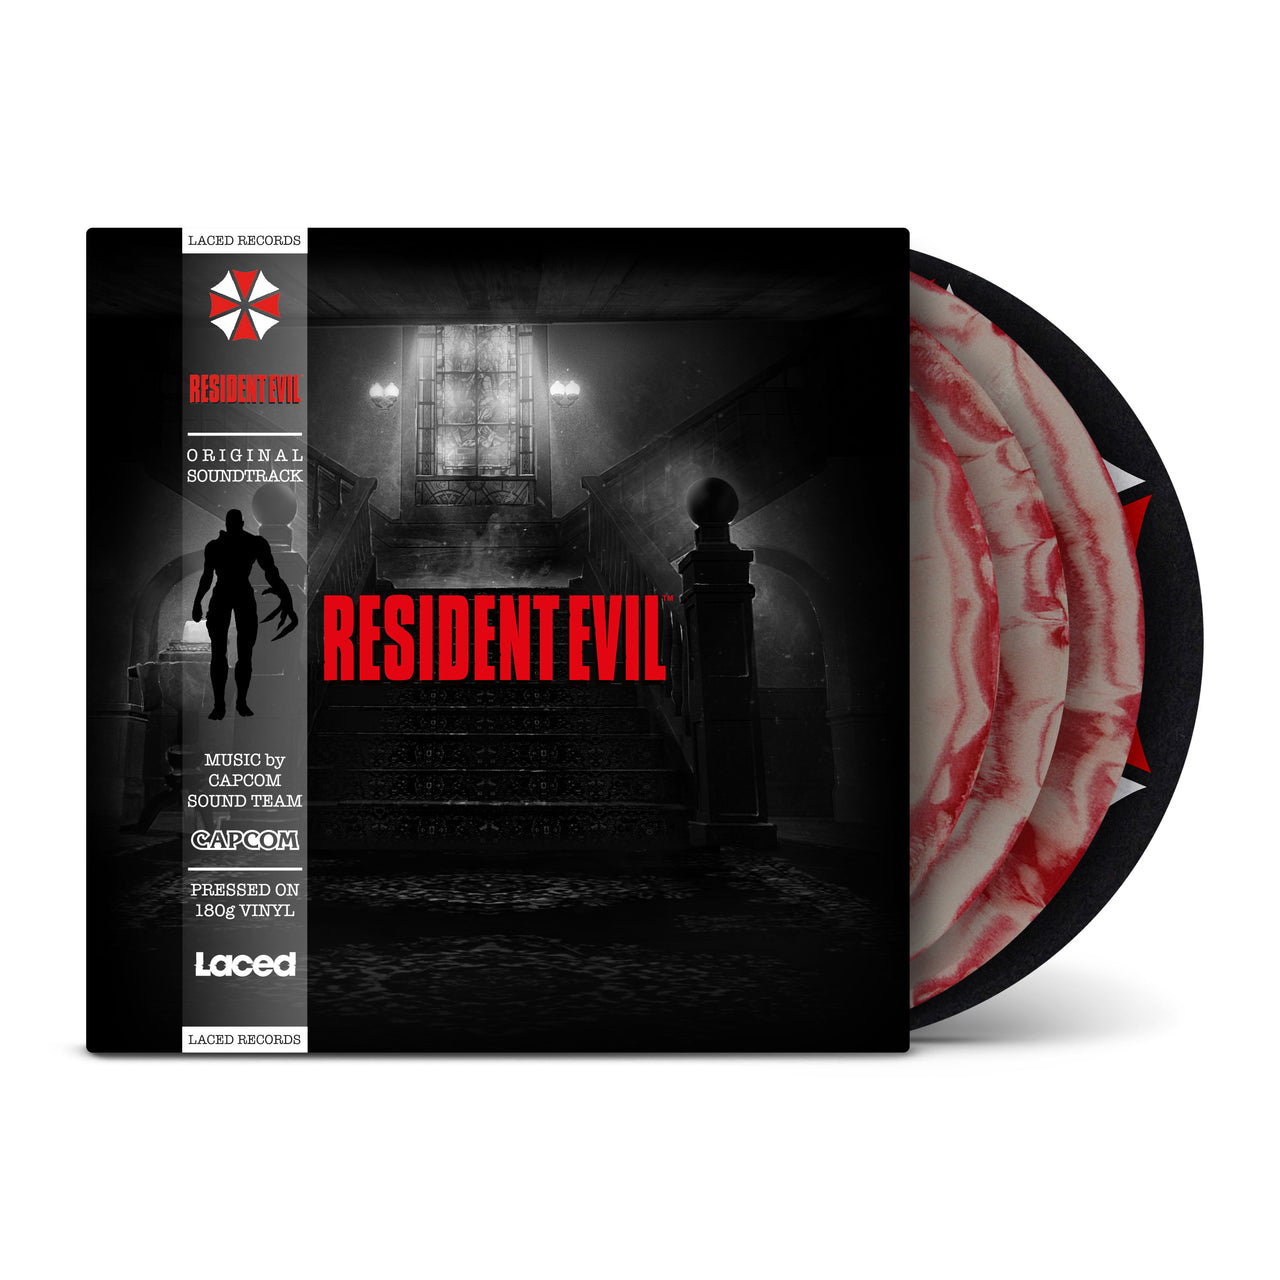 Resident Evil (1996 Original Soundtrack + Original Soundtrack Remix) (Limited Edition Deluxe Triple Vinyl)